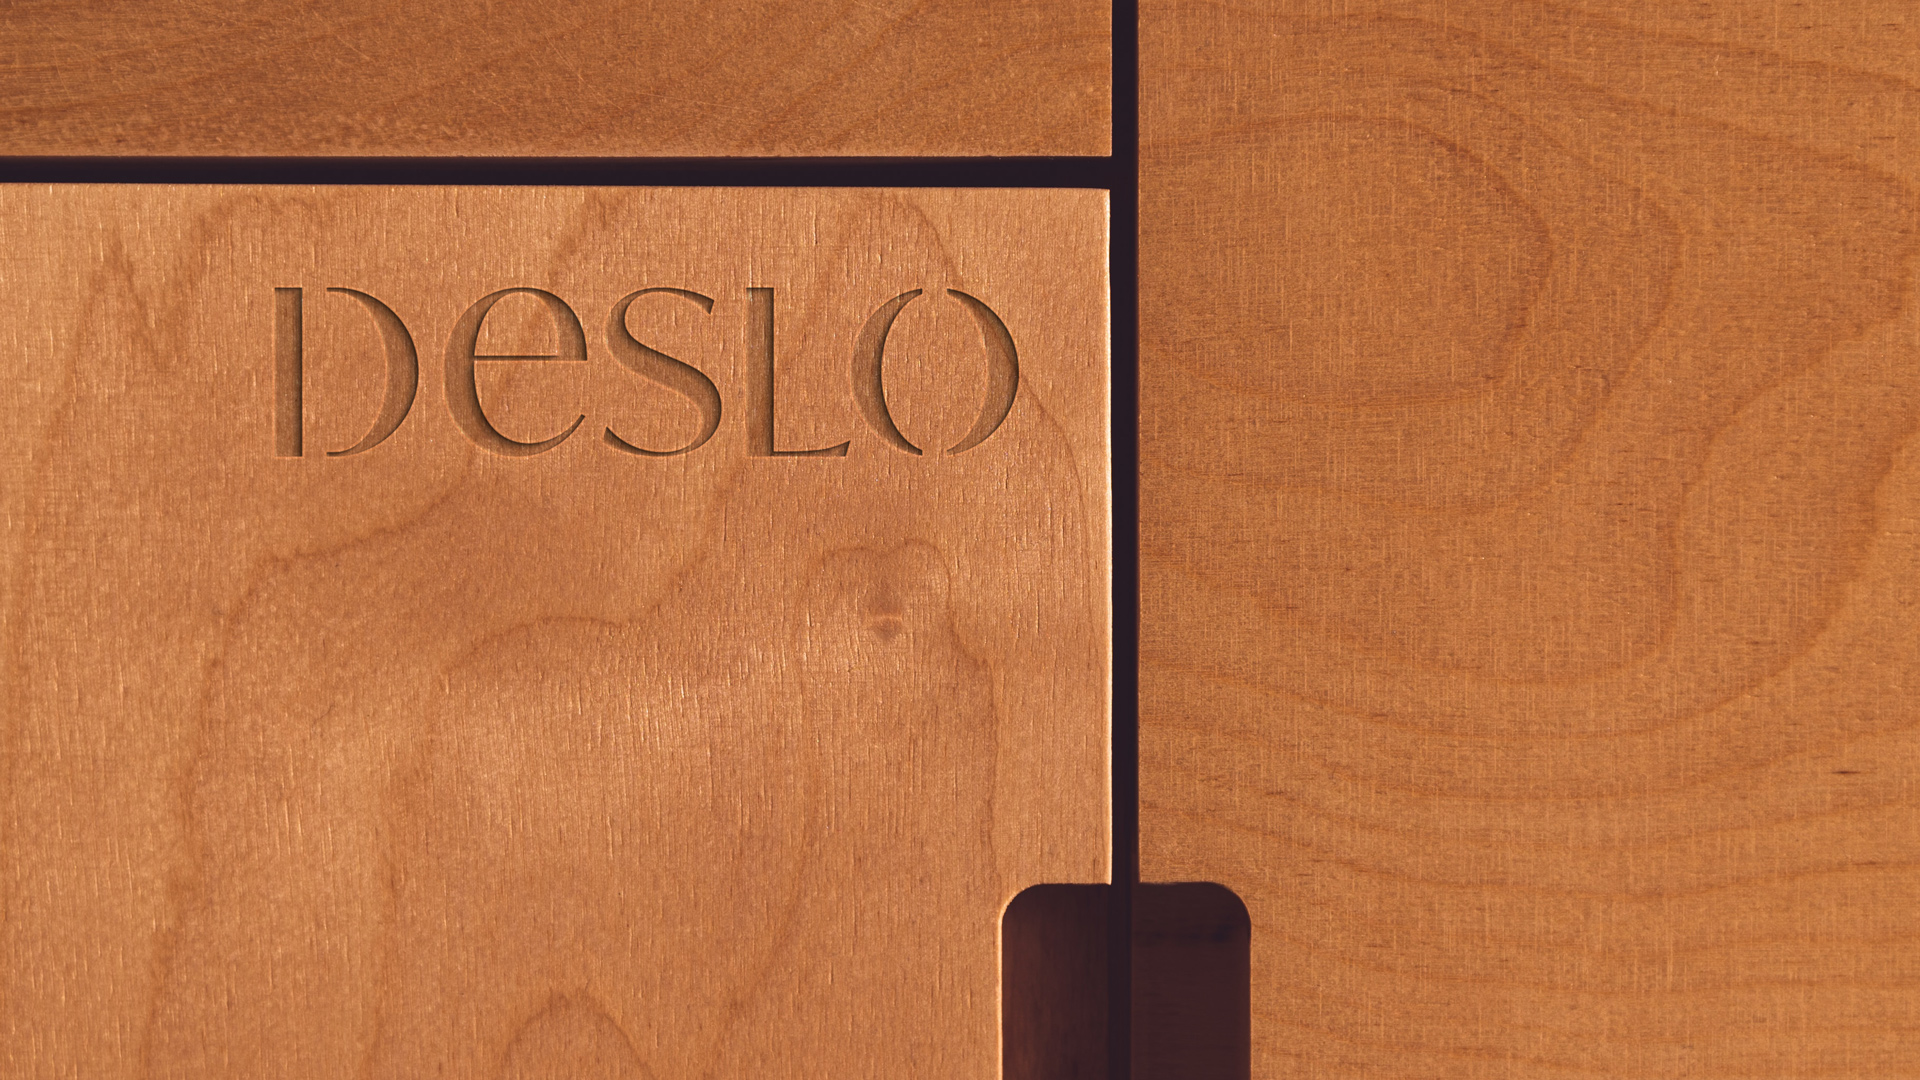 Deslo Brand Identity Designed by André Santos